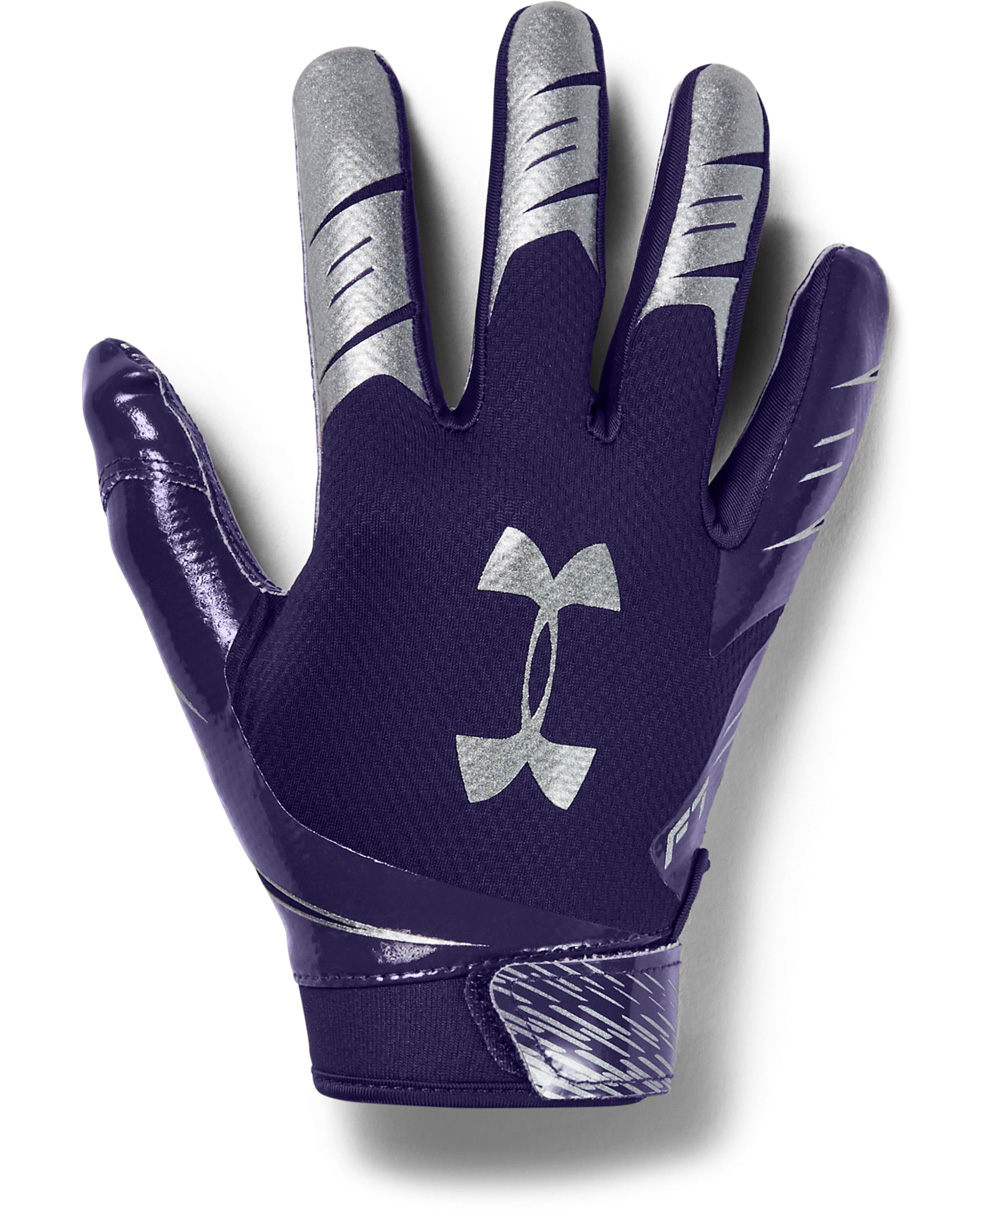 purple under armour football gloves